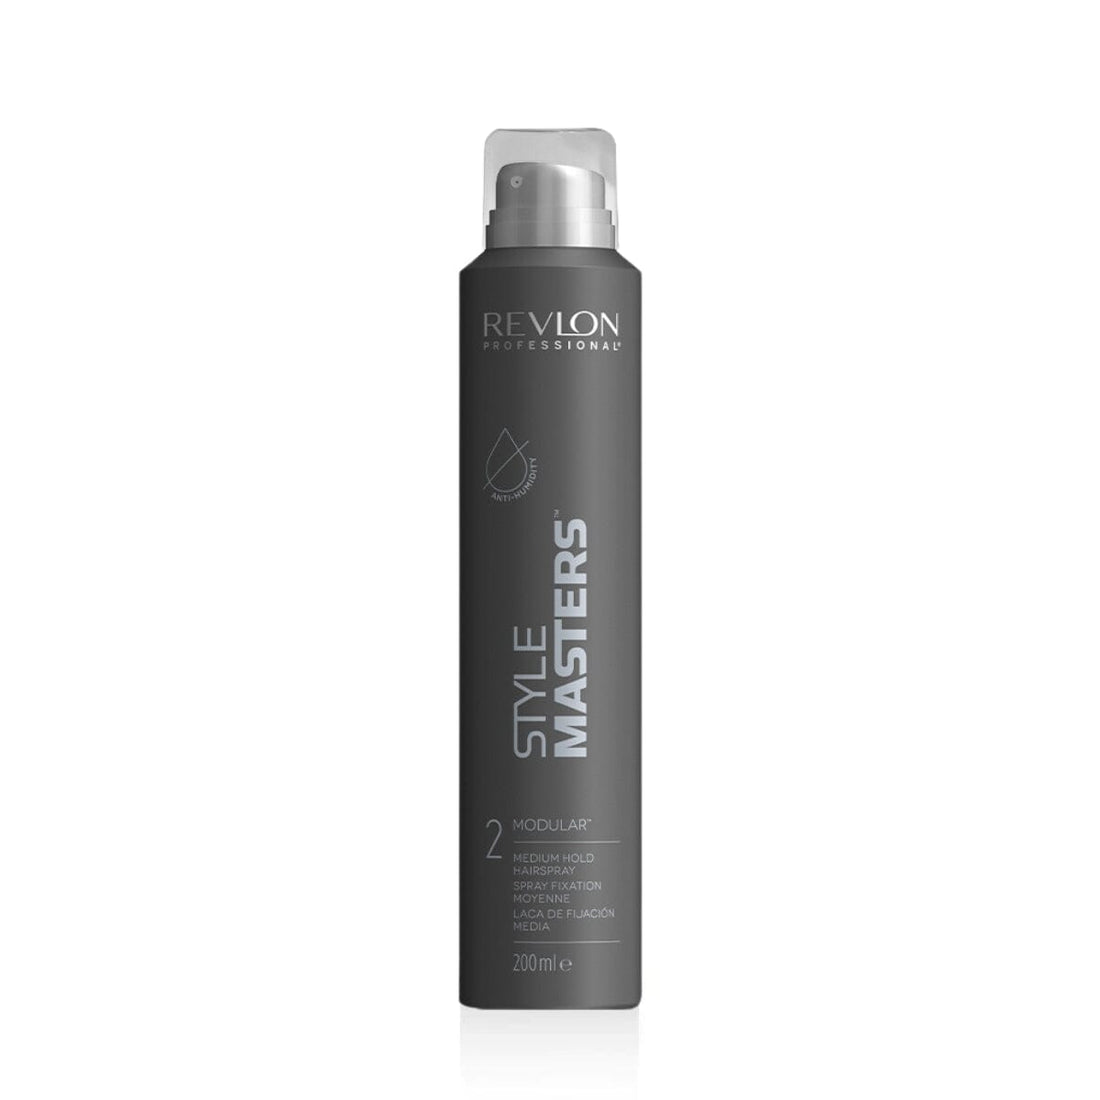 Revlon Professional Style Masters Modular Medium-Hold Hairspray 200ml - HairMNL